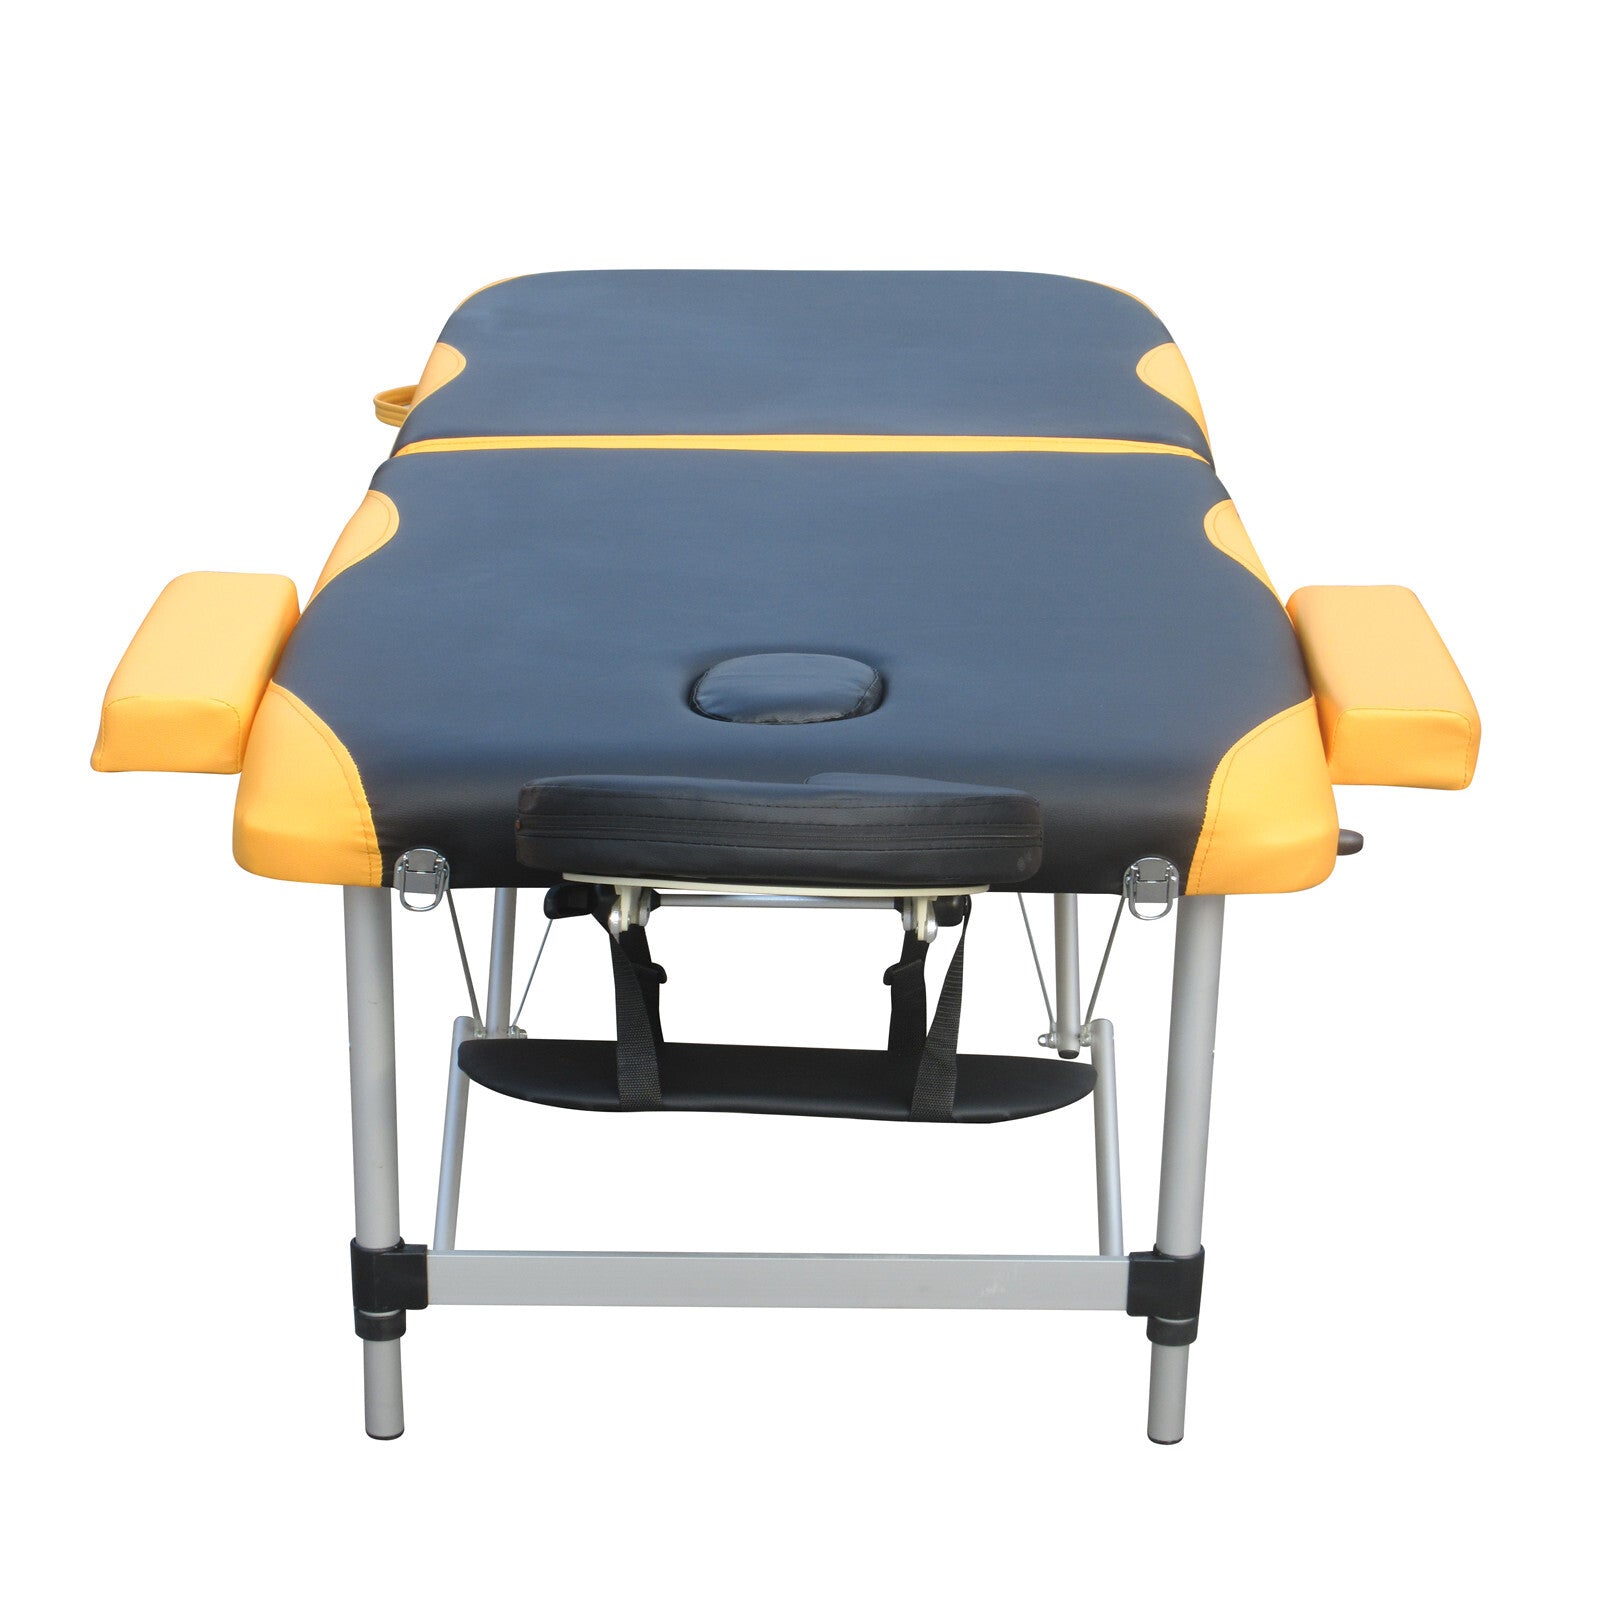 2 Fold Portable Aluminium Massage Table Massage Bed Beauty Therapy - SILBERSHELL